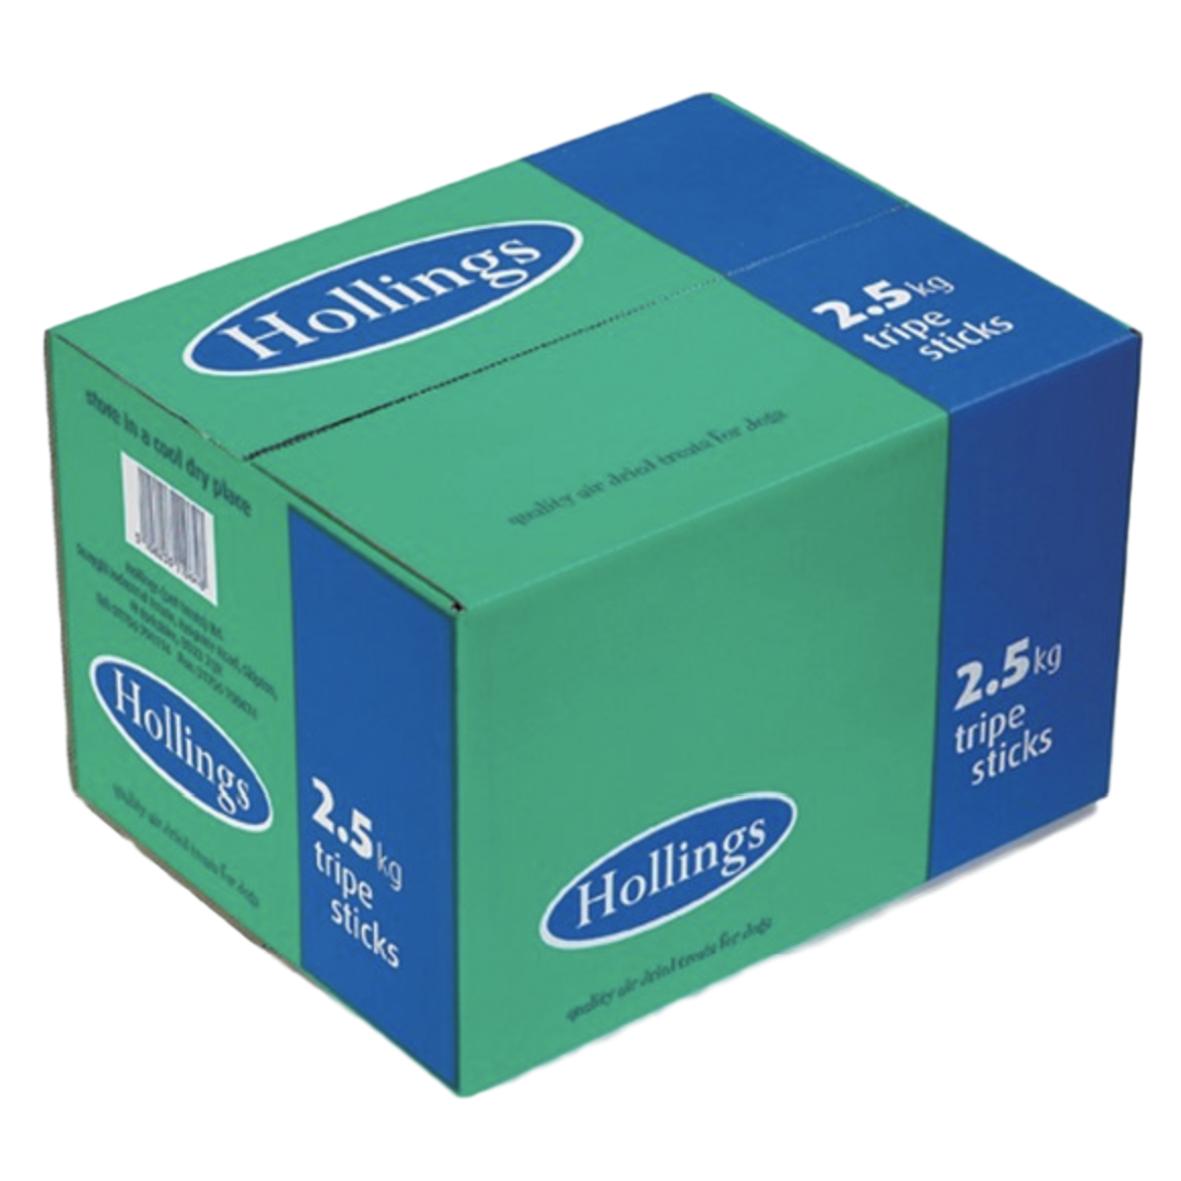 Hollings Tripe Sticks 2.5kg (Boxed 